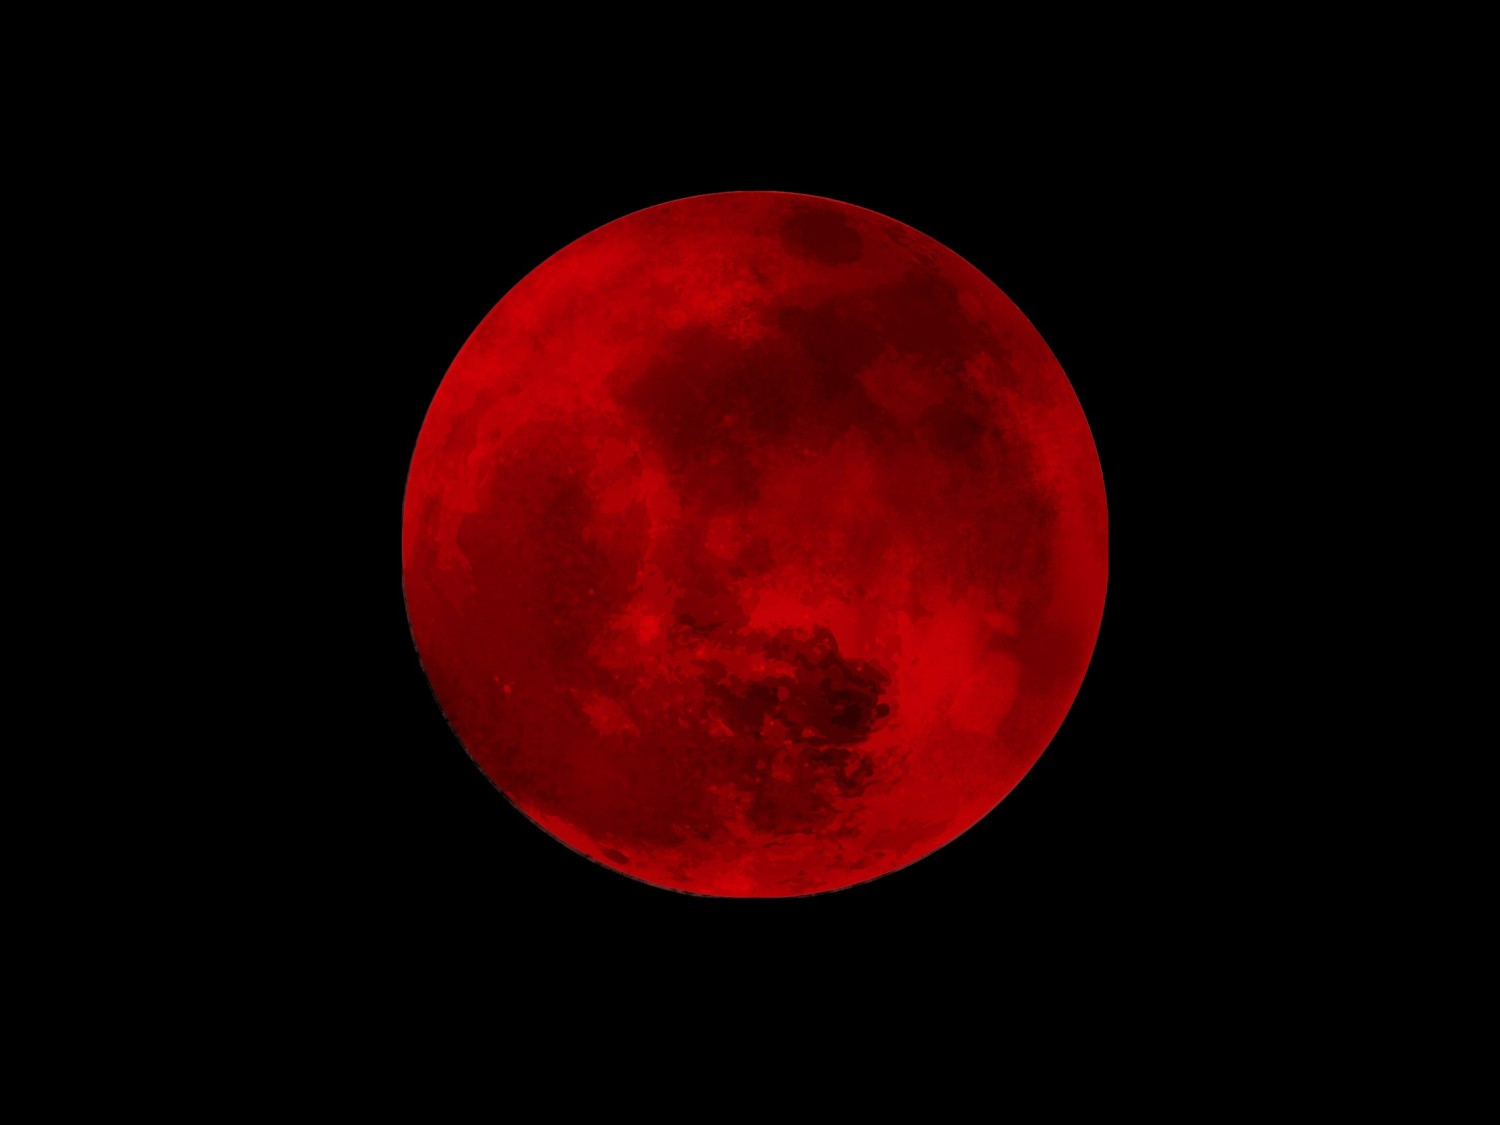 Red moon in night sky